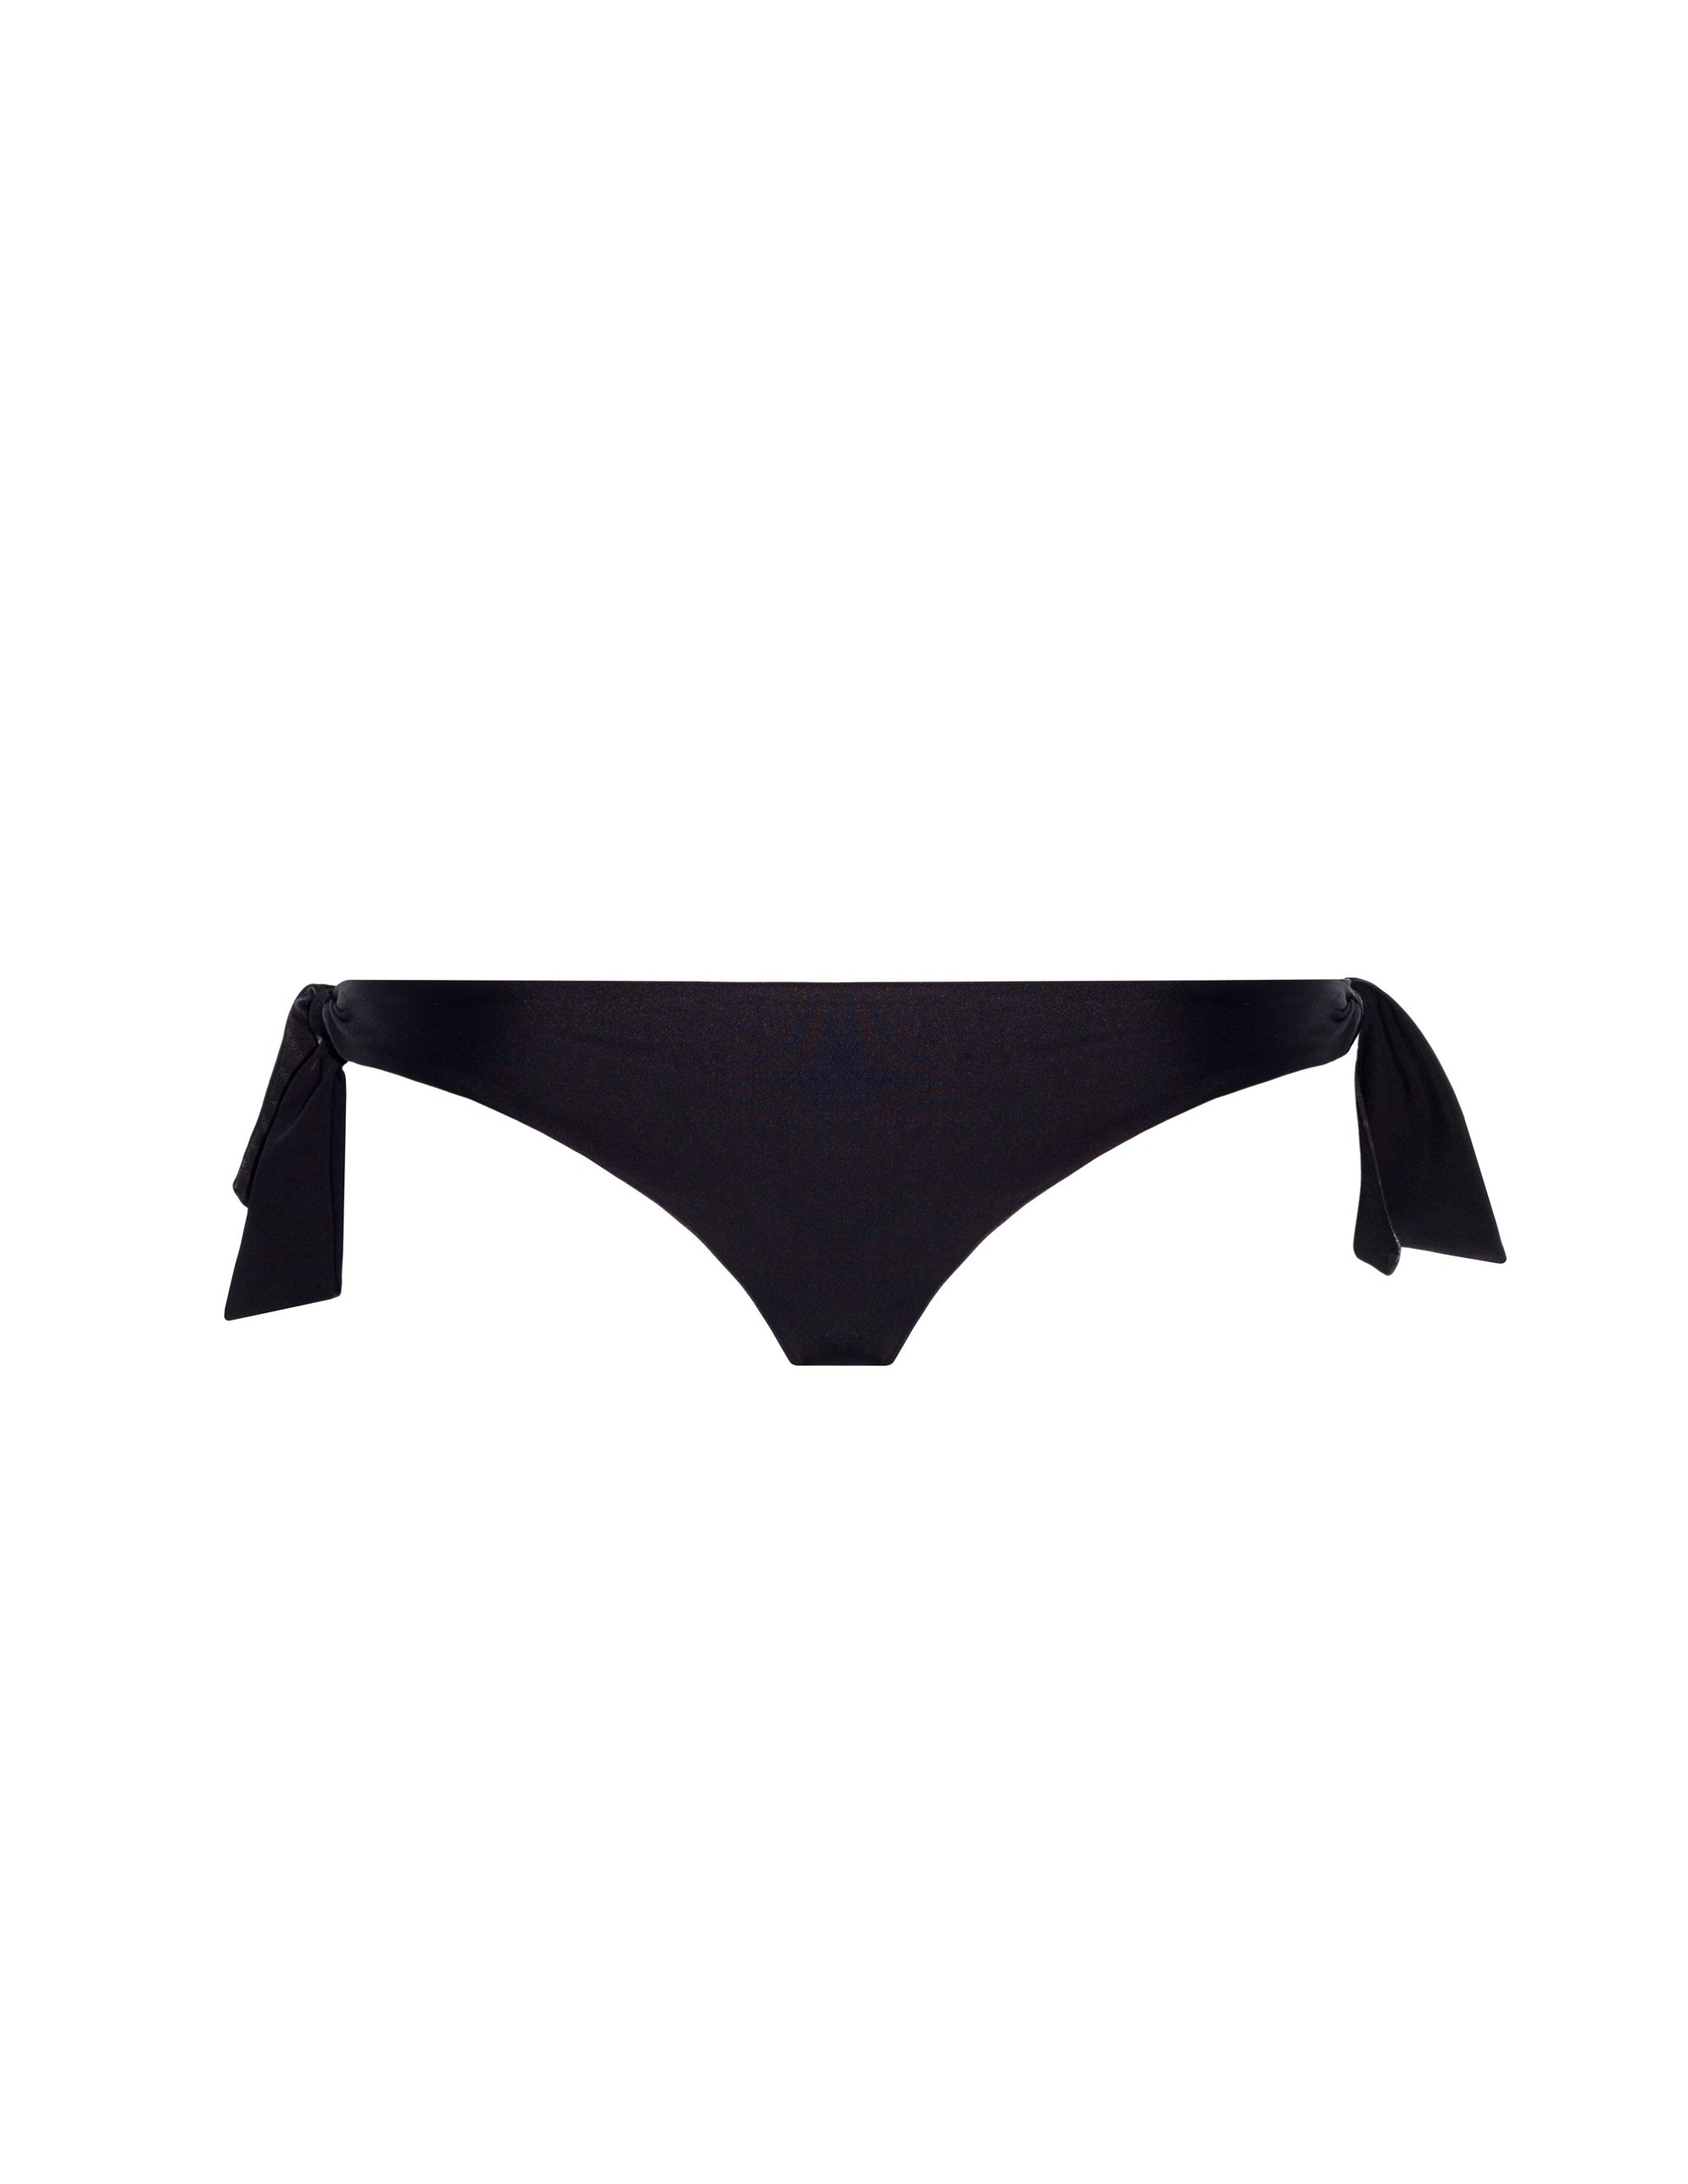 CONTA bikini bottom - MATTE BLACK